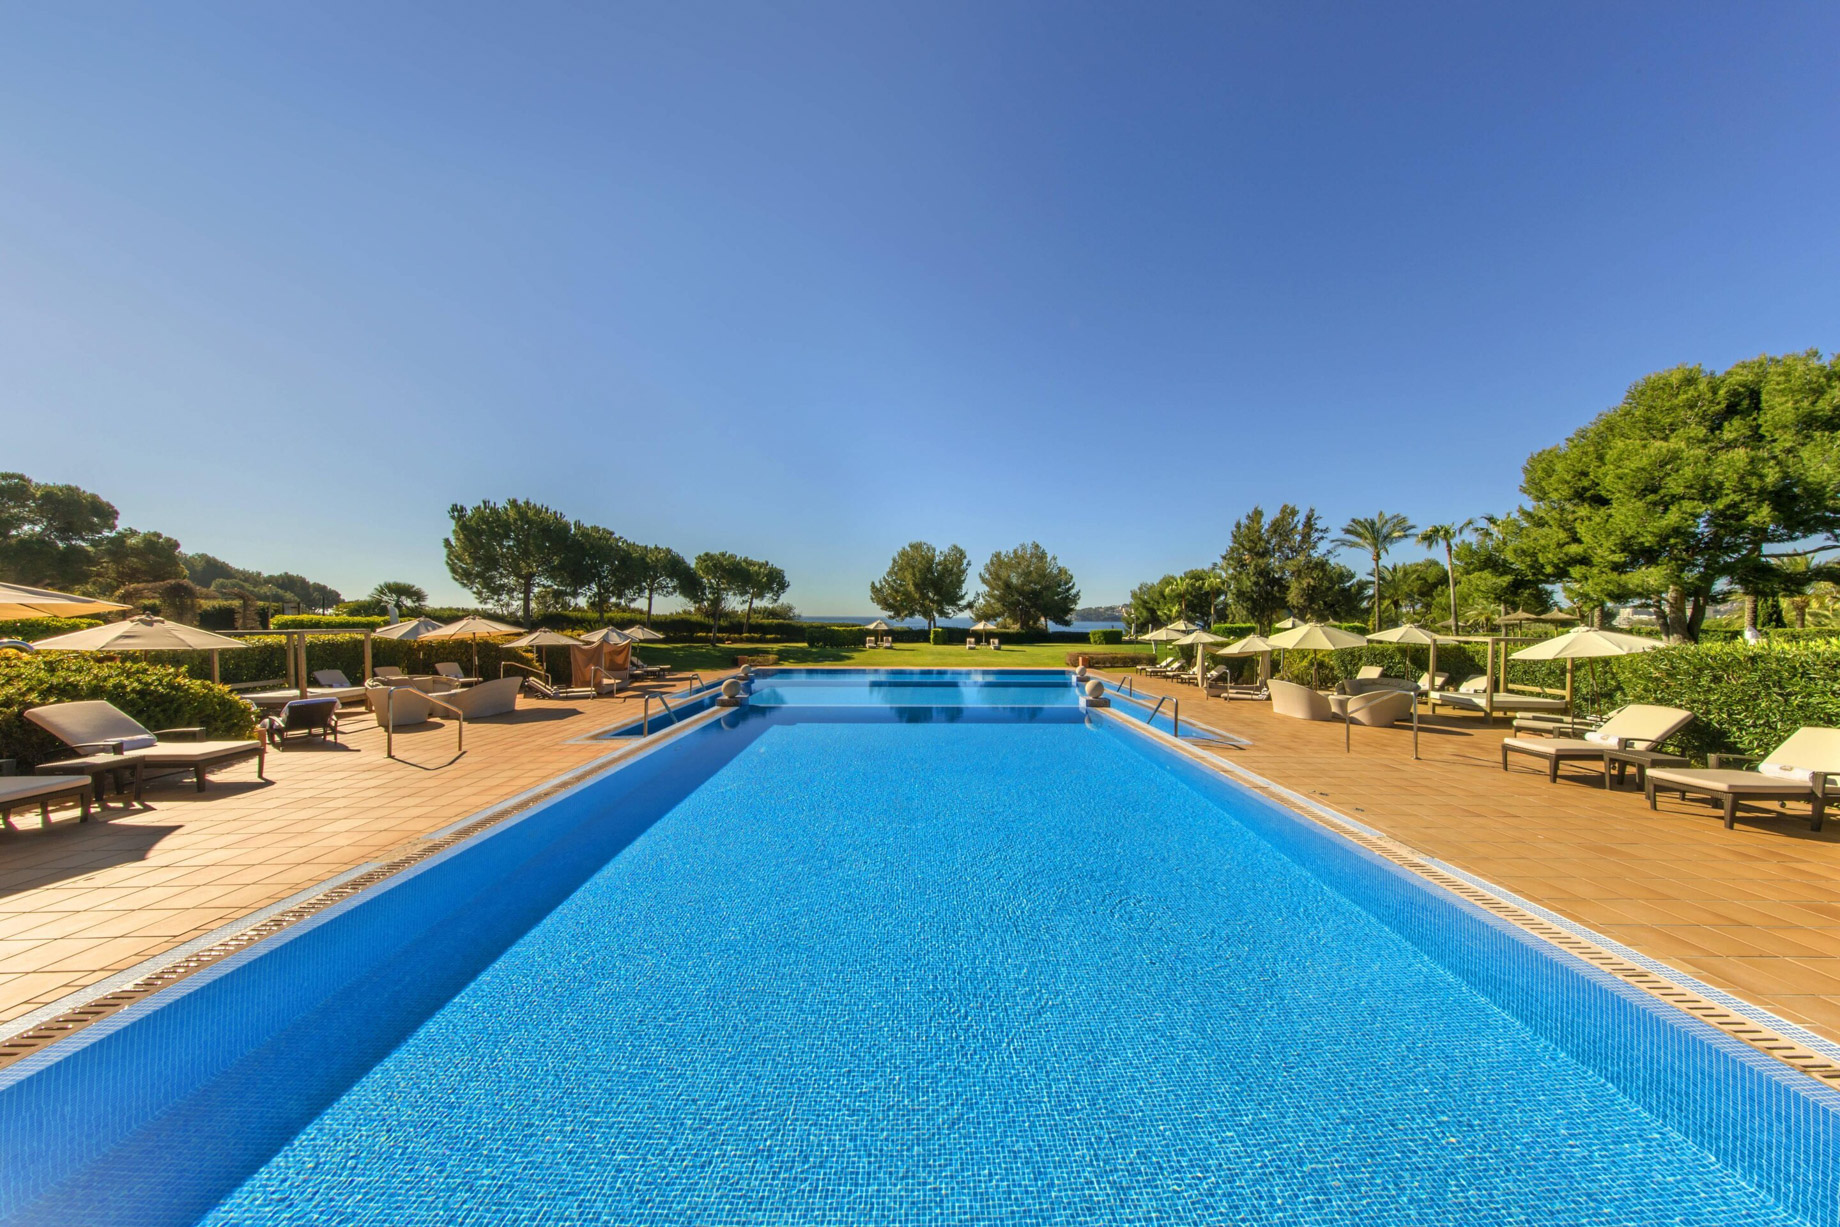 The St. Regis Mardavall Mallorca Resort – Palma de Mallorca, Spain – Pool